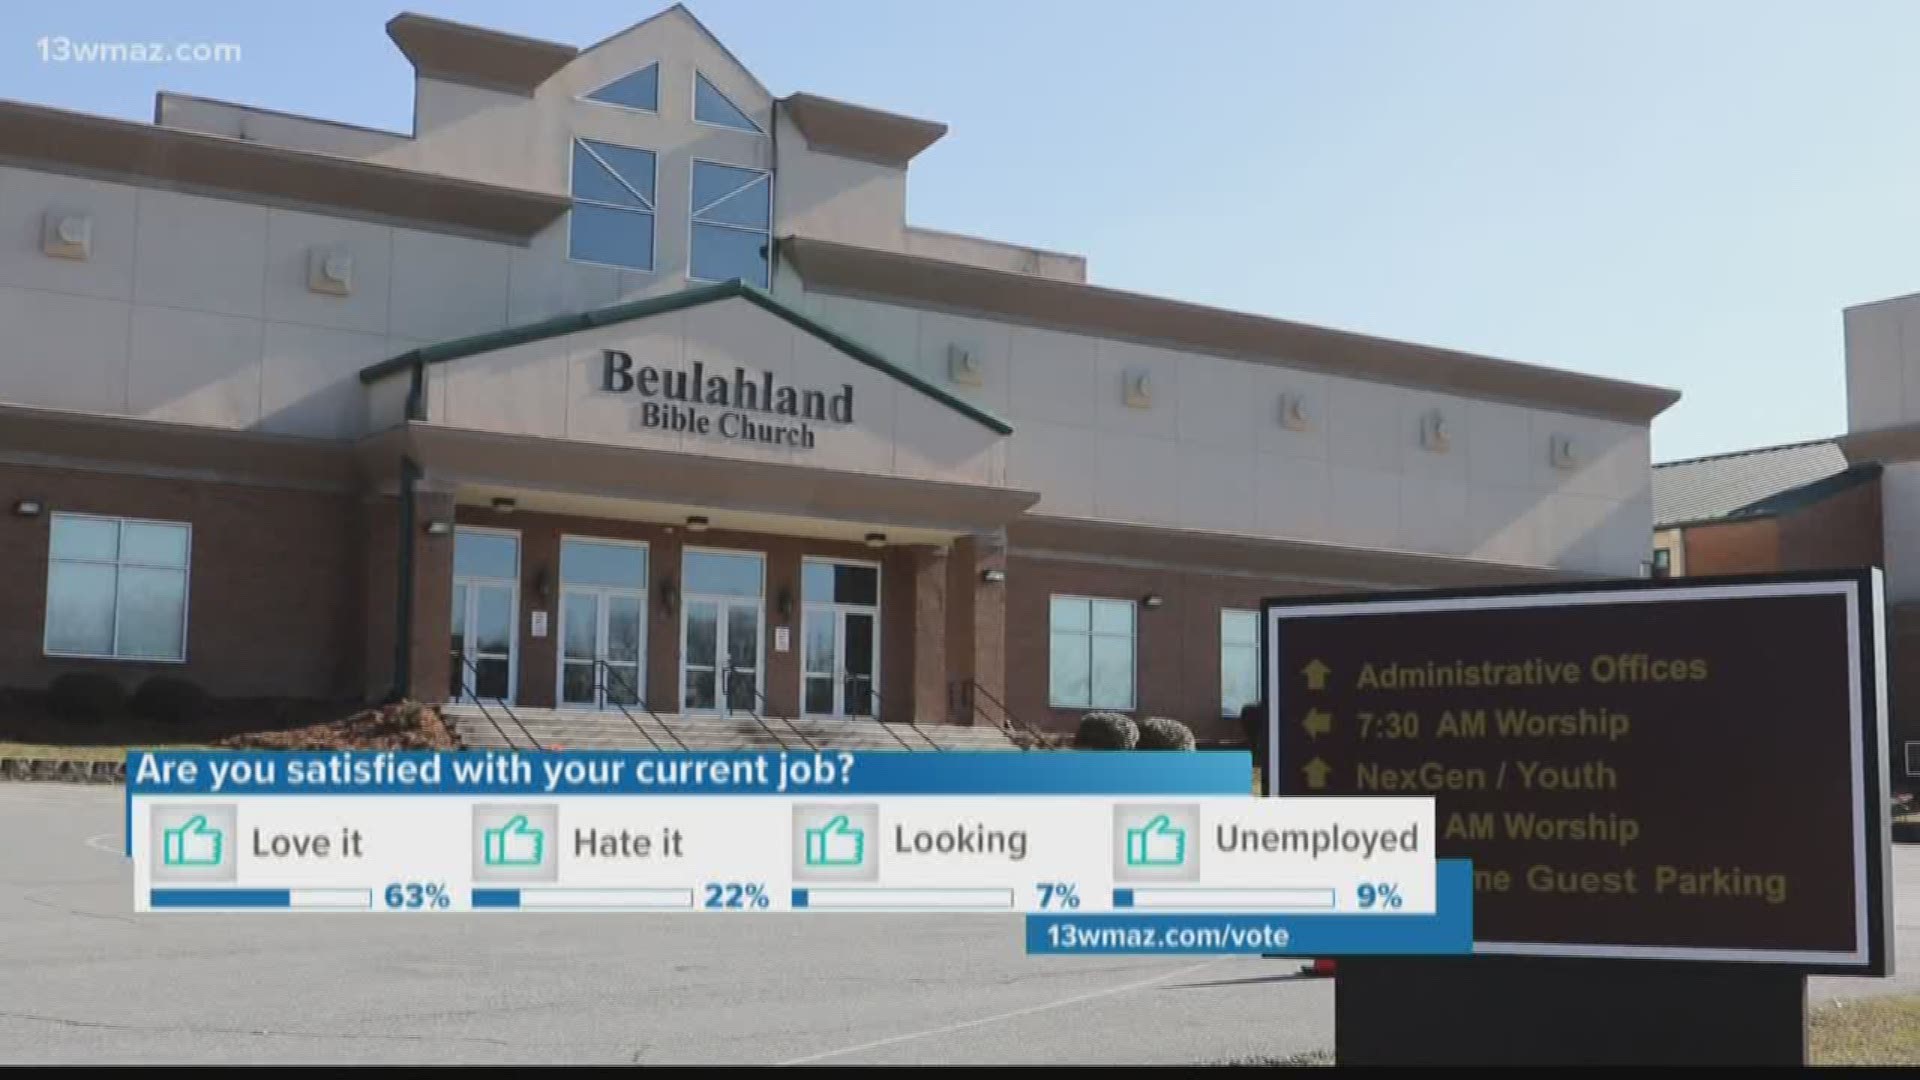 Beulahland Bible Church to host job fair